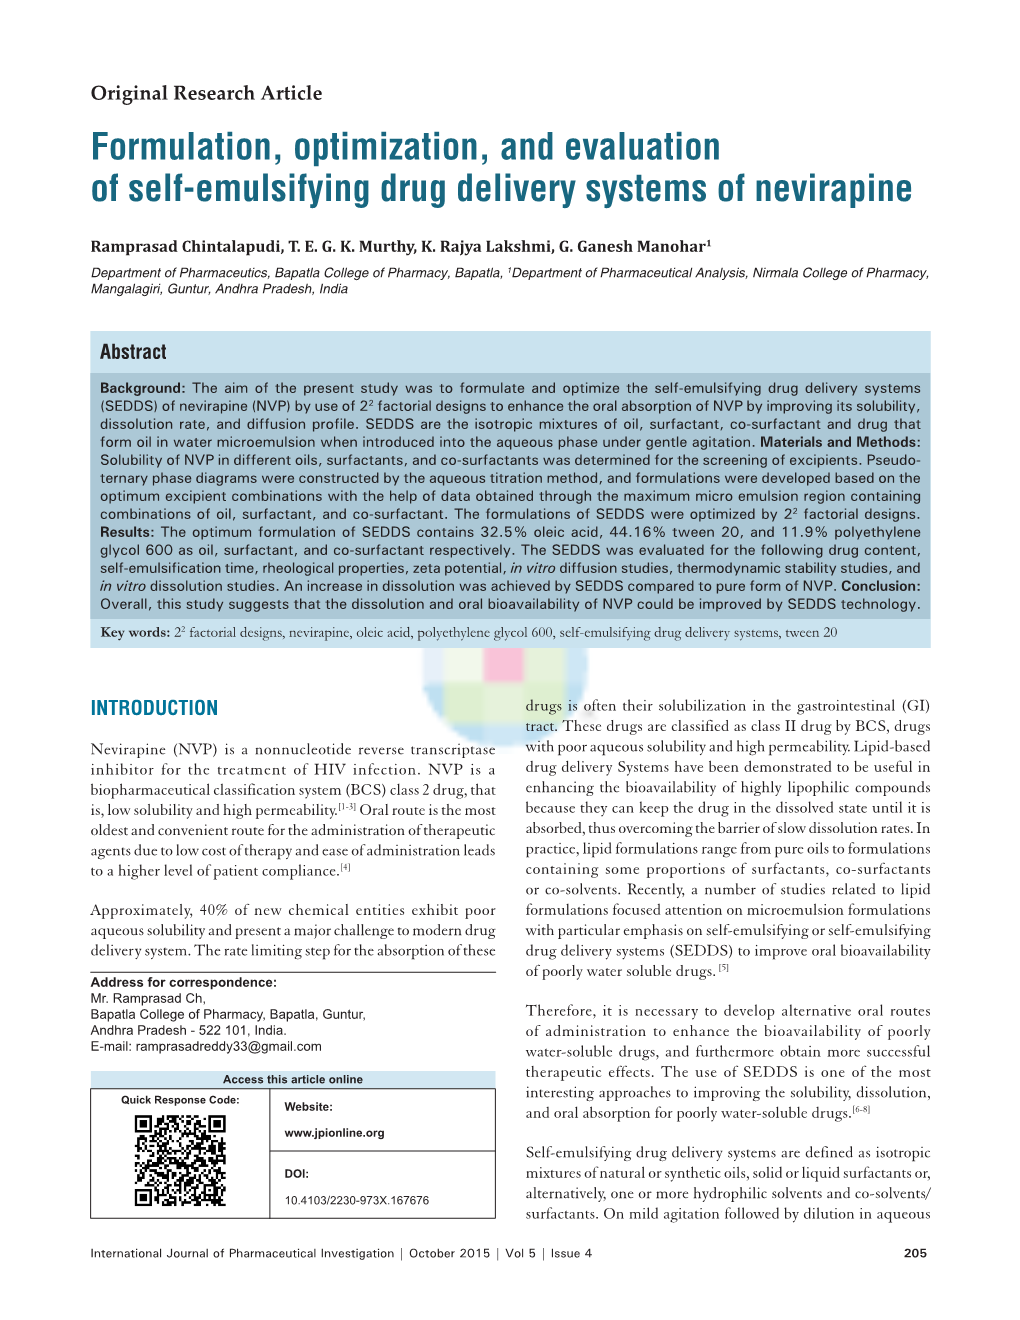 Formulation, Optimization, and Evaluation of Self-Emulsifying Drug Delivery Systems of Nevirapine